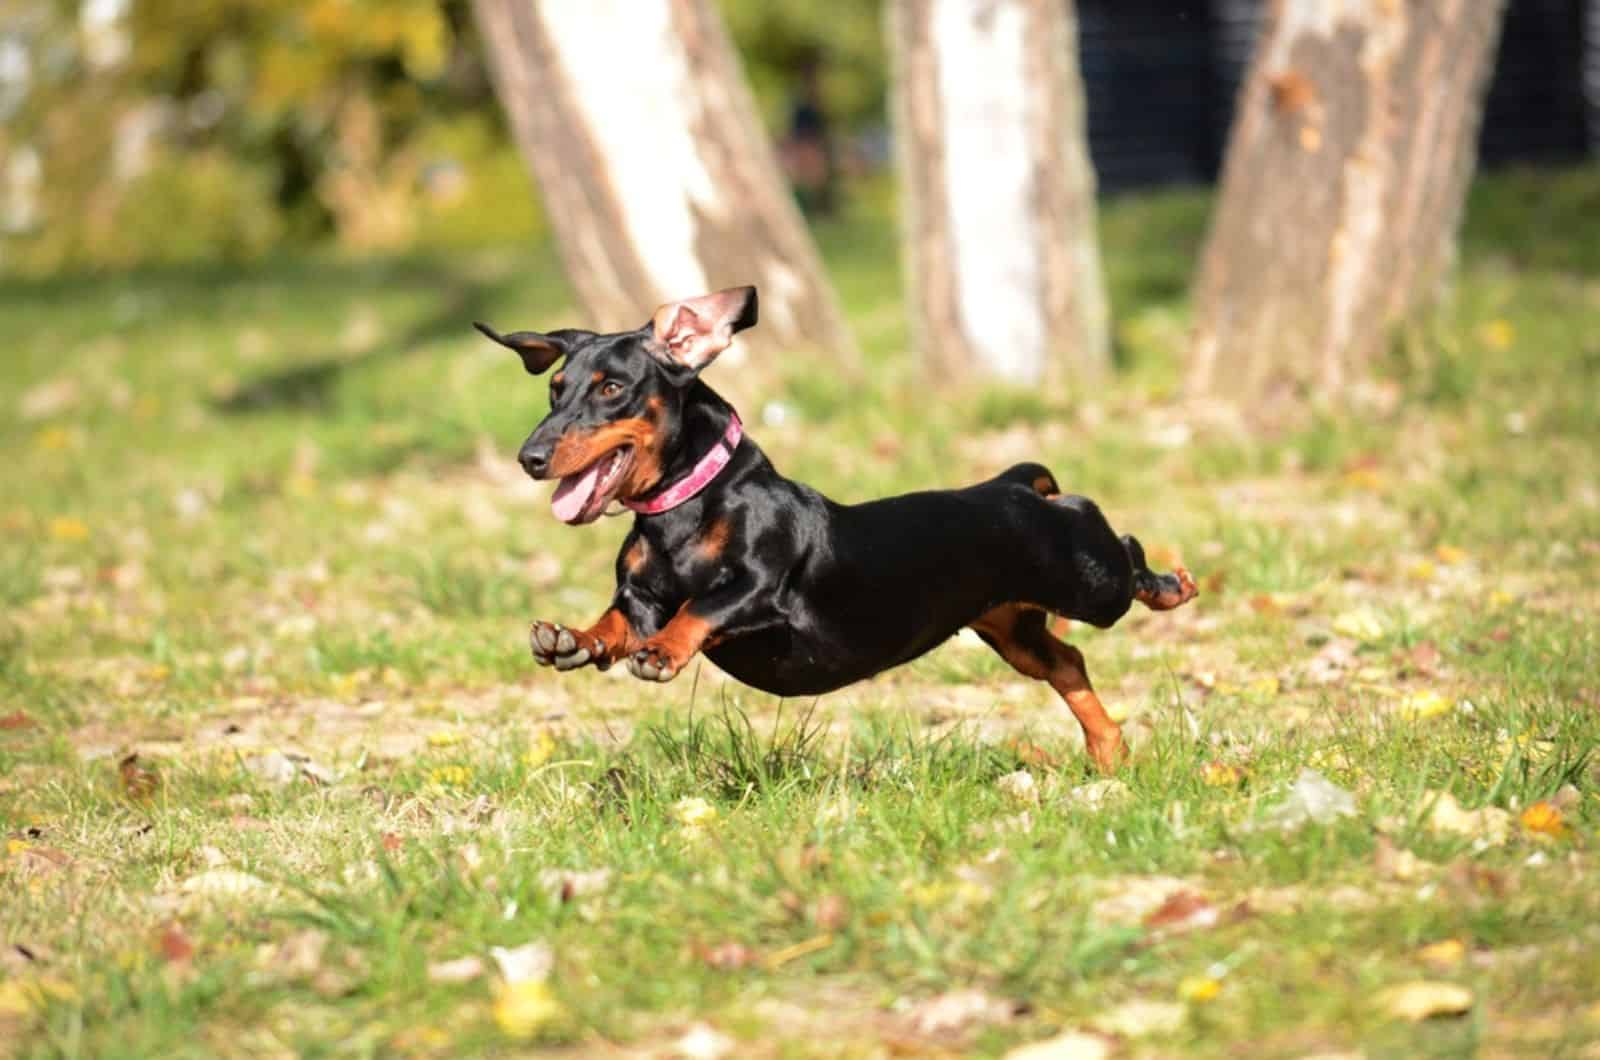 dachshund dog running and jumping